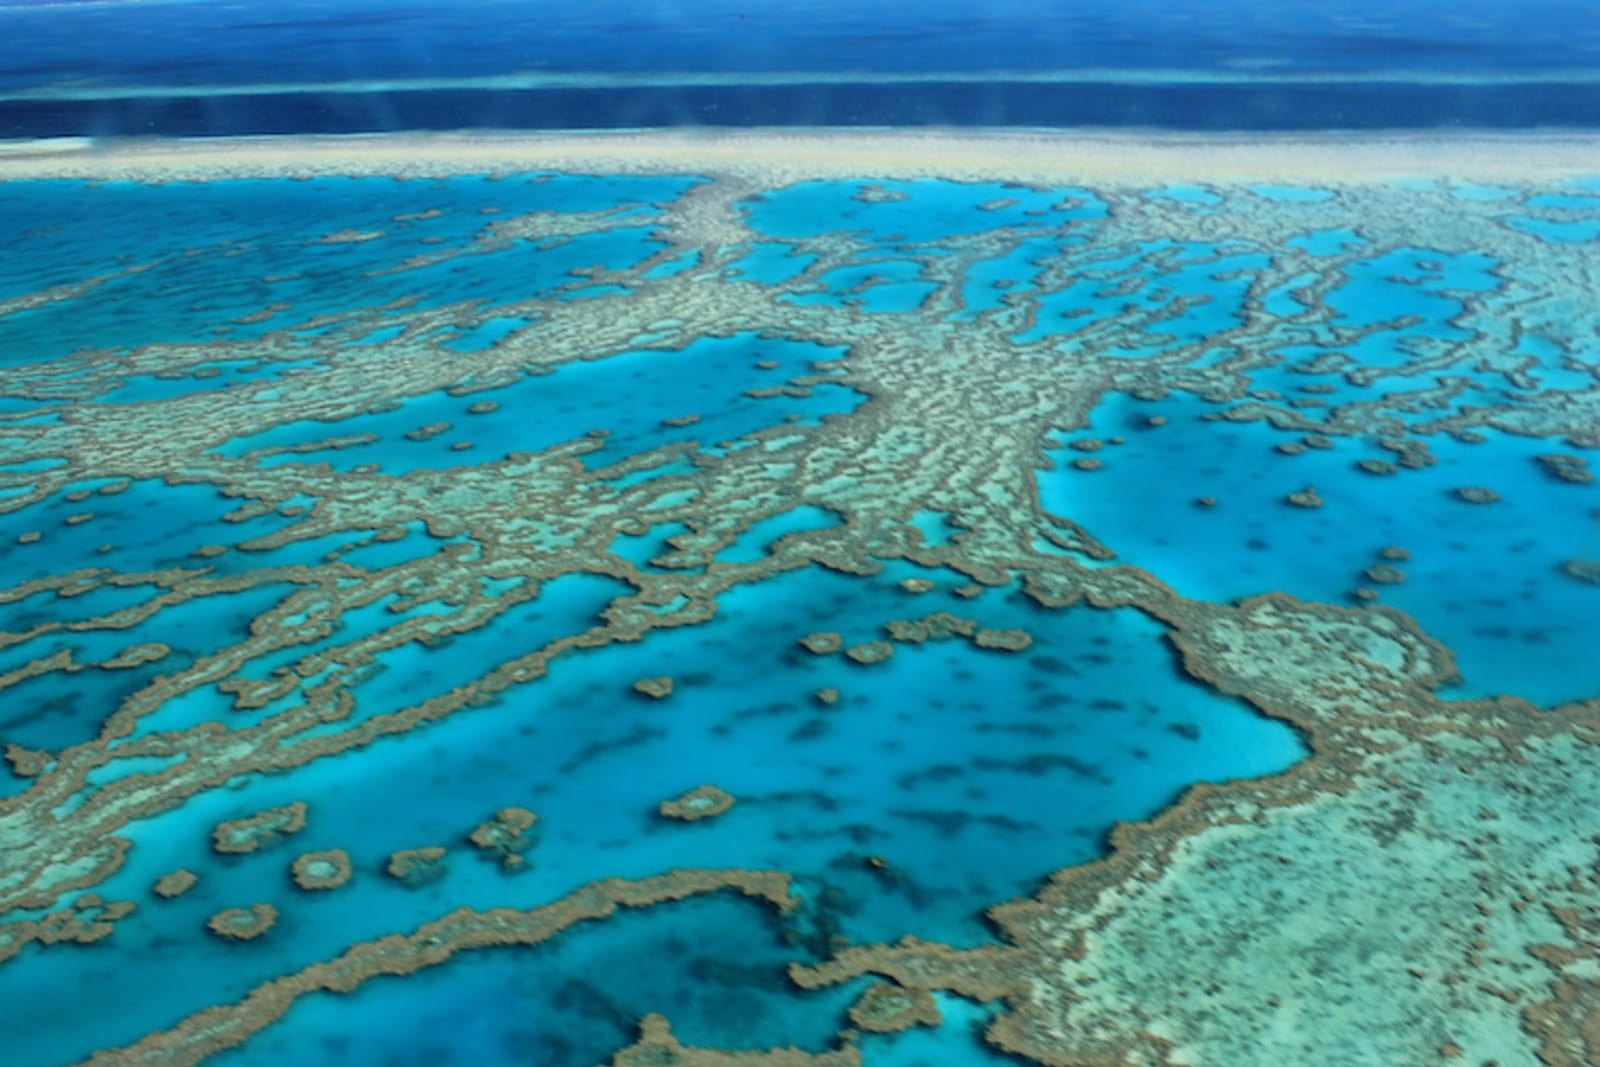 The Great Barrier Reef. Credit: FarbenfroheWunderwelt/Flickr.com